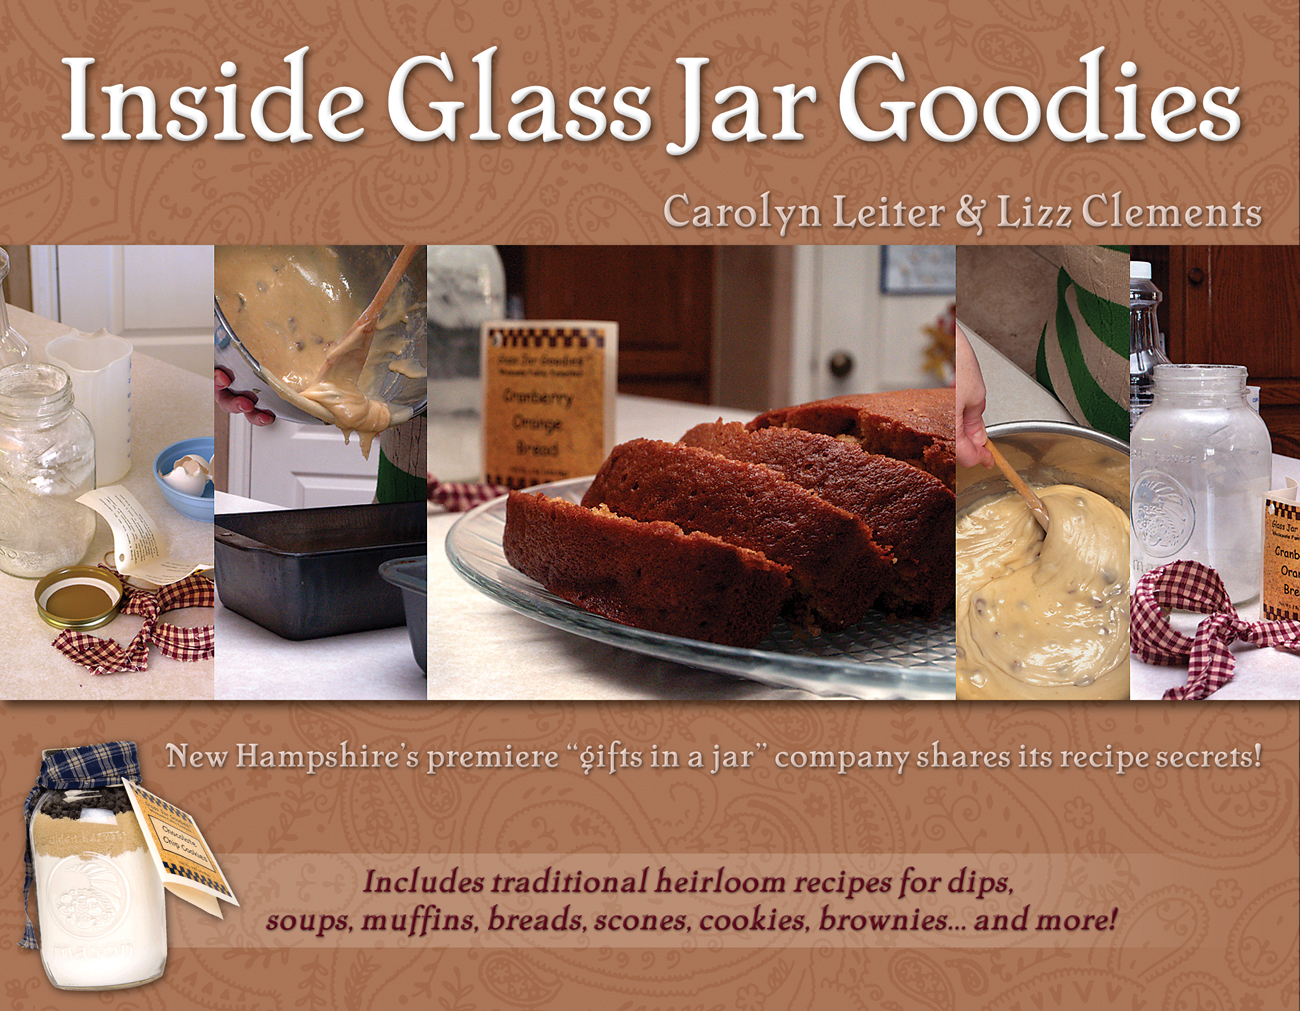 Inside Glass Jar Goodies